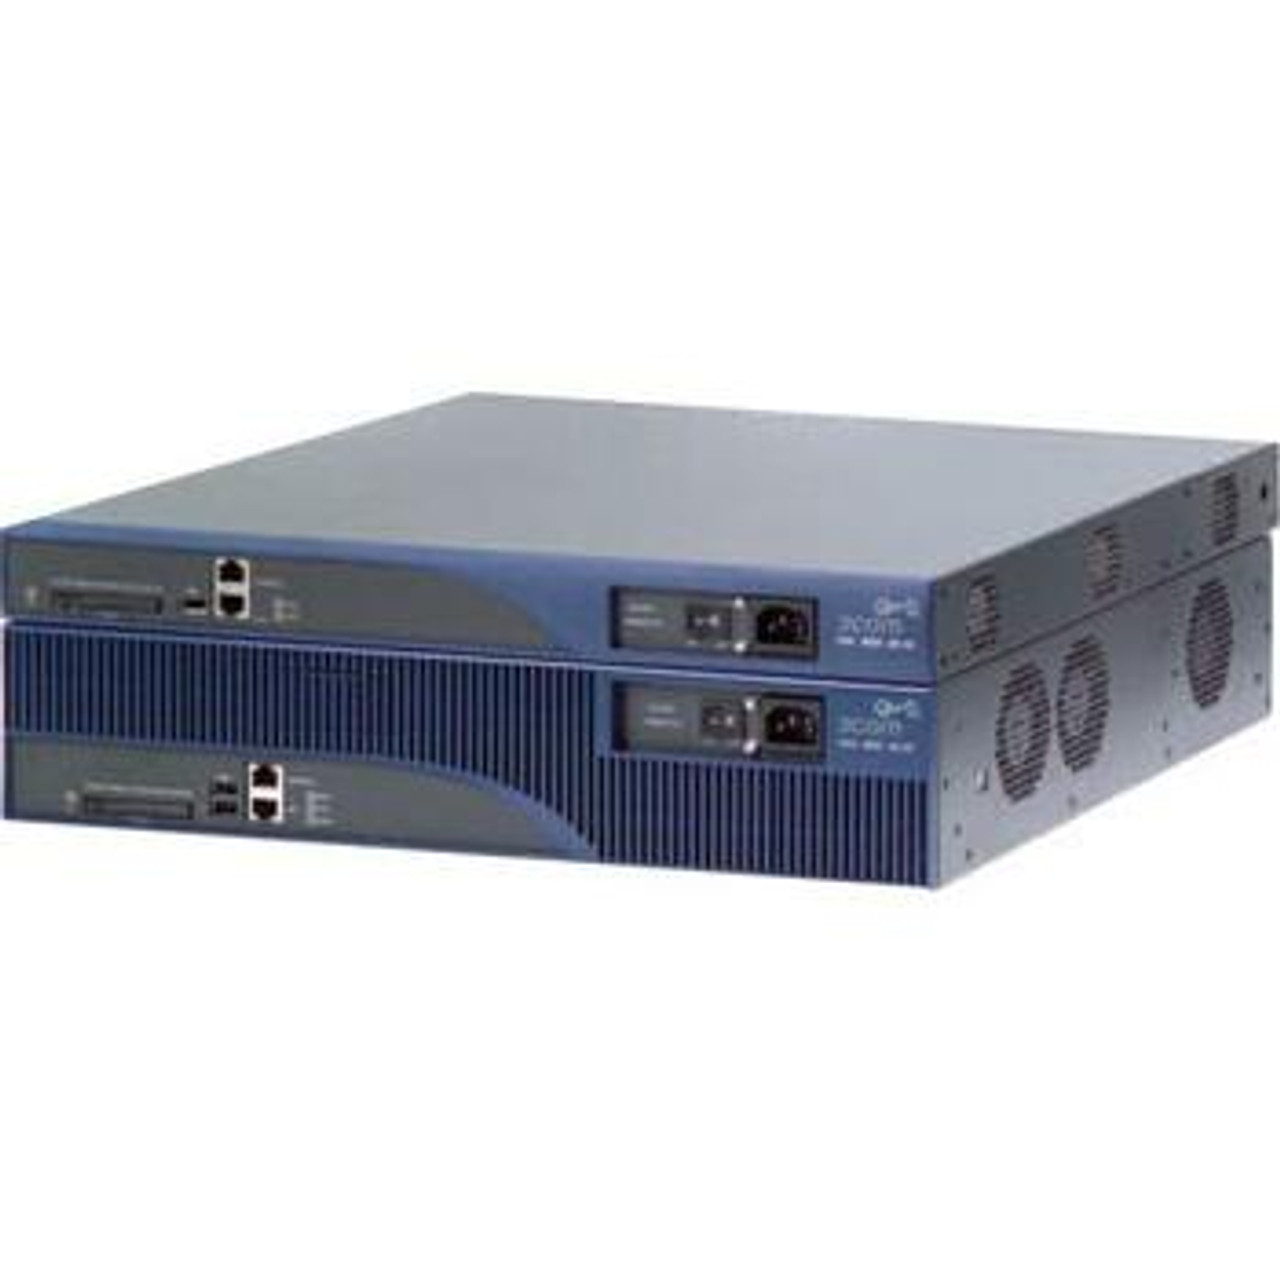 0235A299 3Com MSR 30-40 Multi-Service Router 2 x Services Module 3 x Voice Processing Module 2 x SFP 1 x CompactFlash (CF) Card 2 x 10/100/1000Base